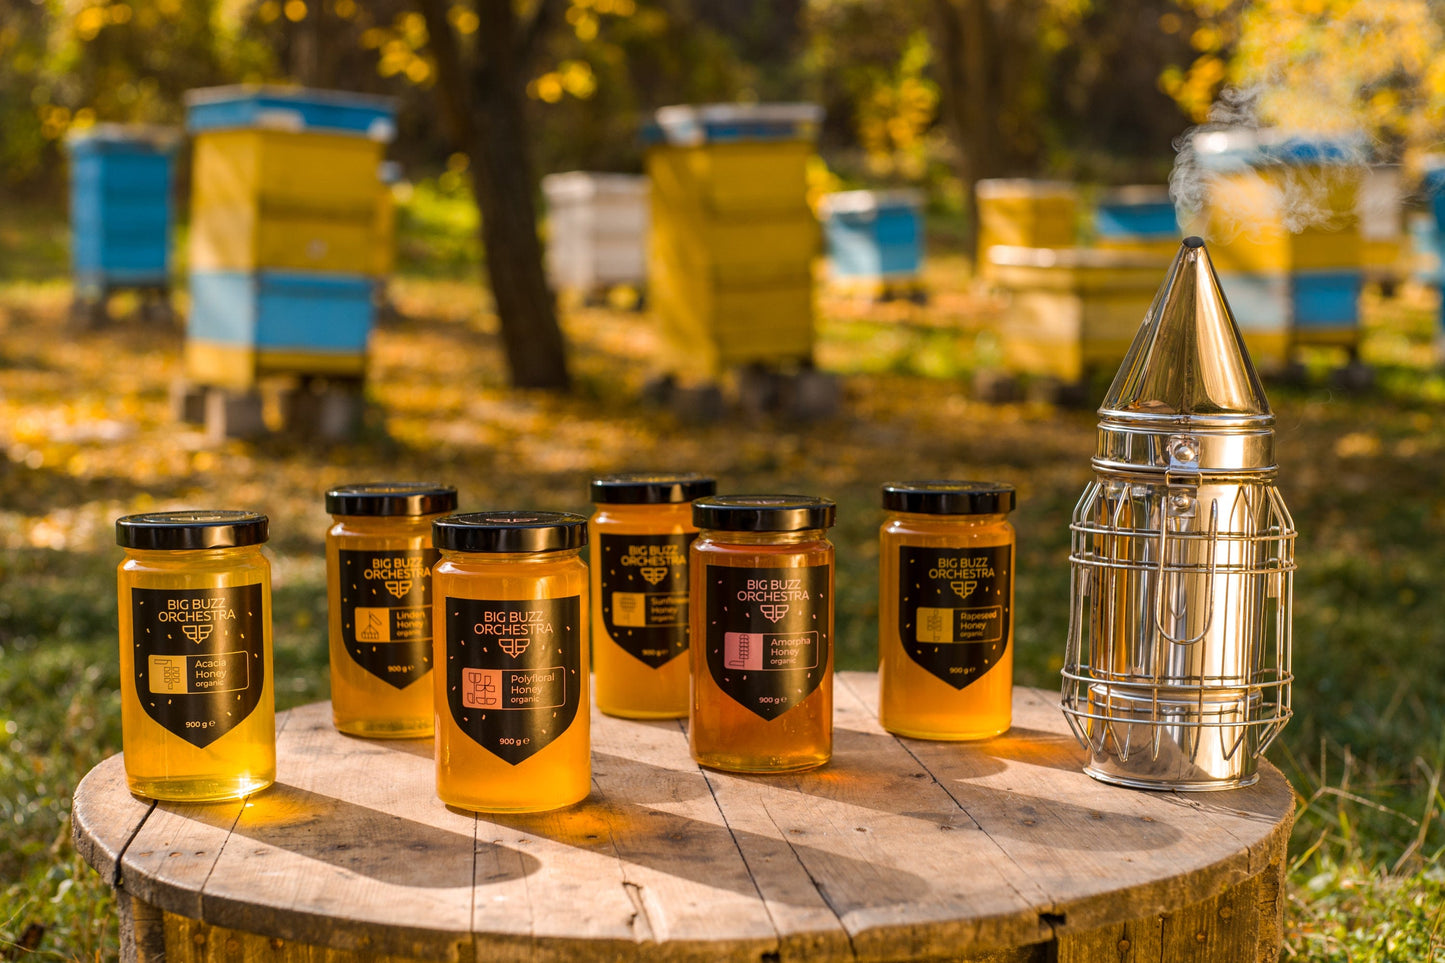 
                  
                    Big Buzz Orchestra Honey Single Jar of Natural Rapeseed Honey
                  
                